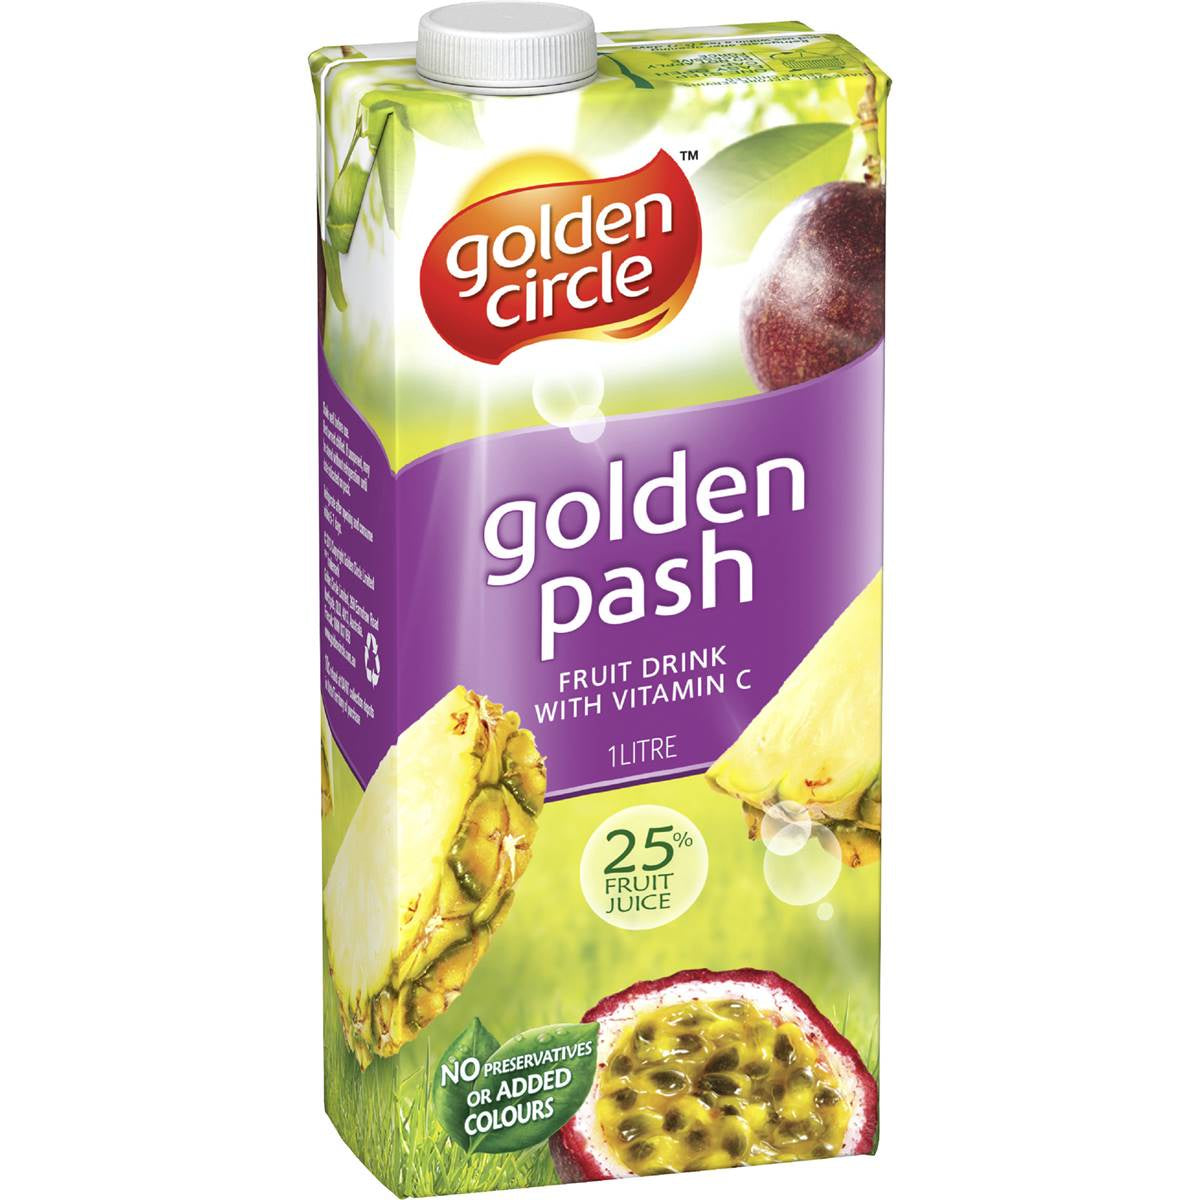 Golden Circle Golden Pash Fruit Drink 1L